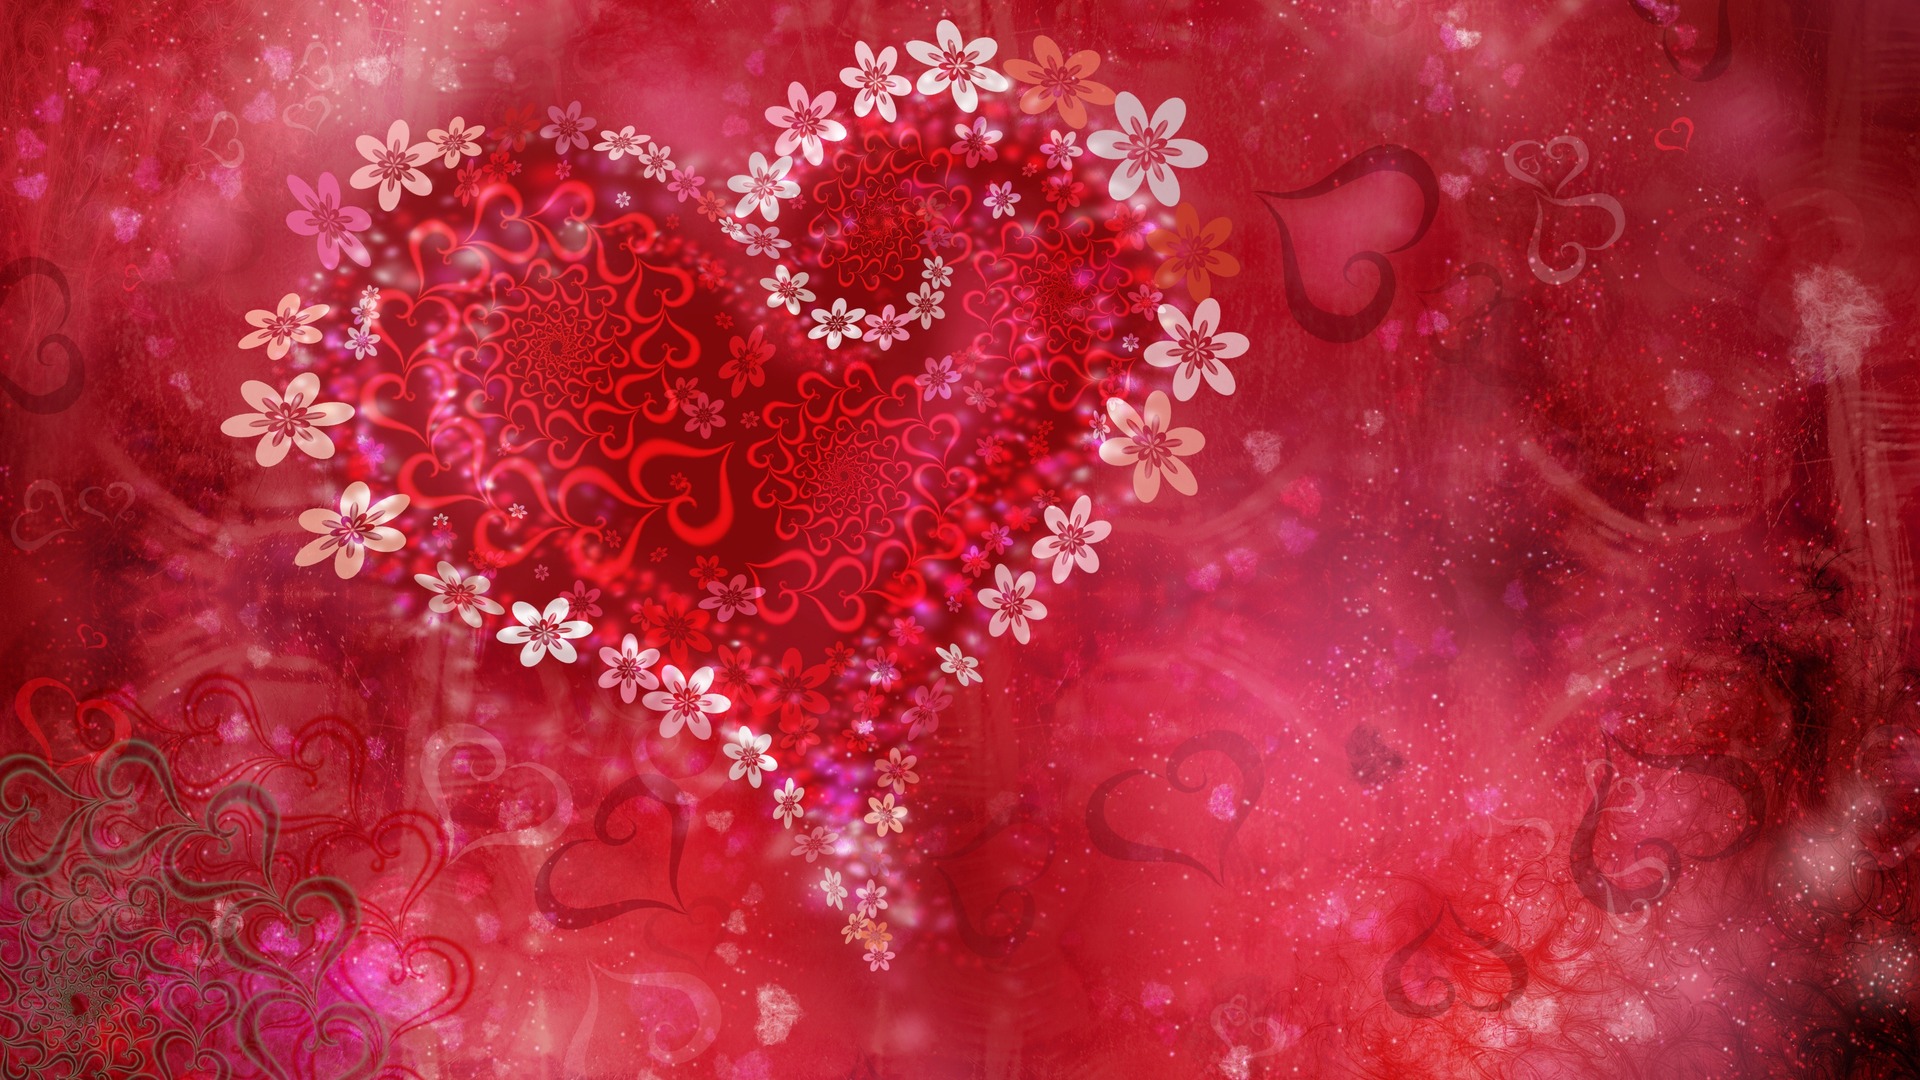 Love Heart Flowers HD Wallpaper Love Valentine Wallpapers 1920x1080